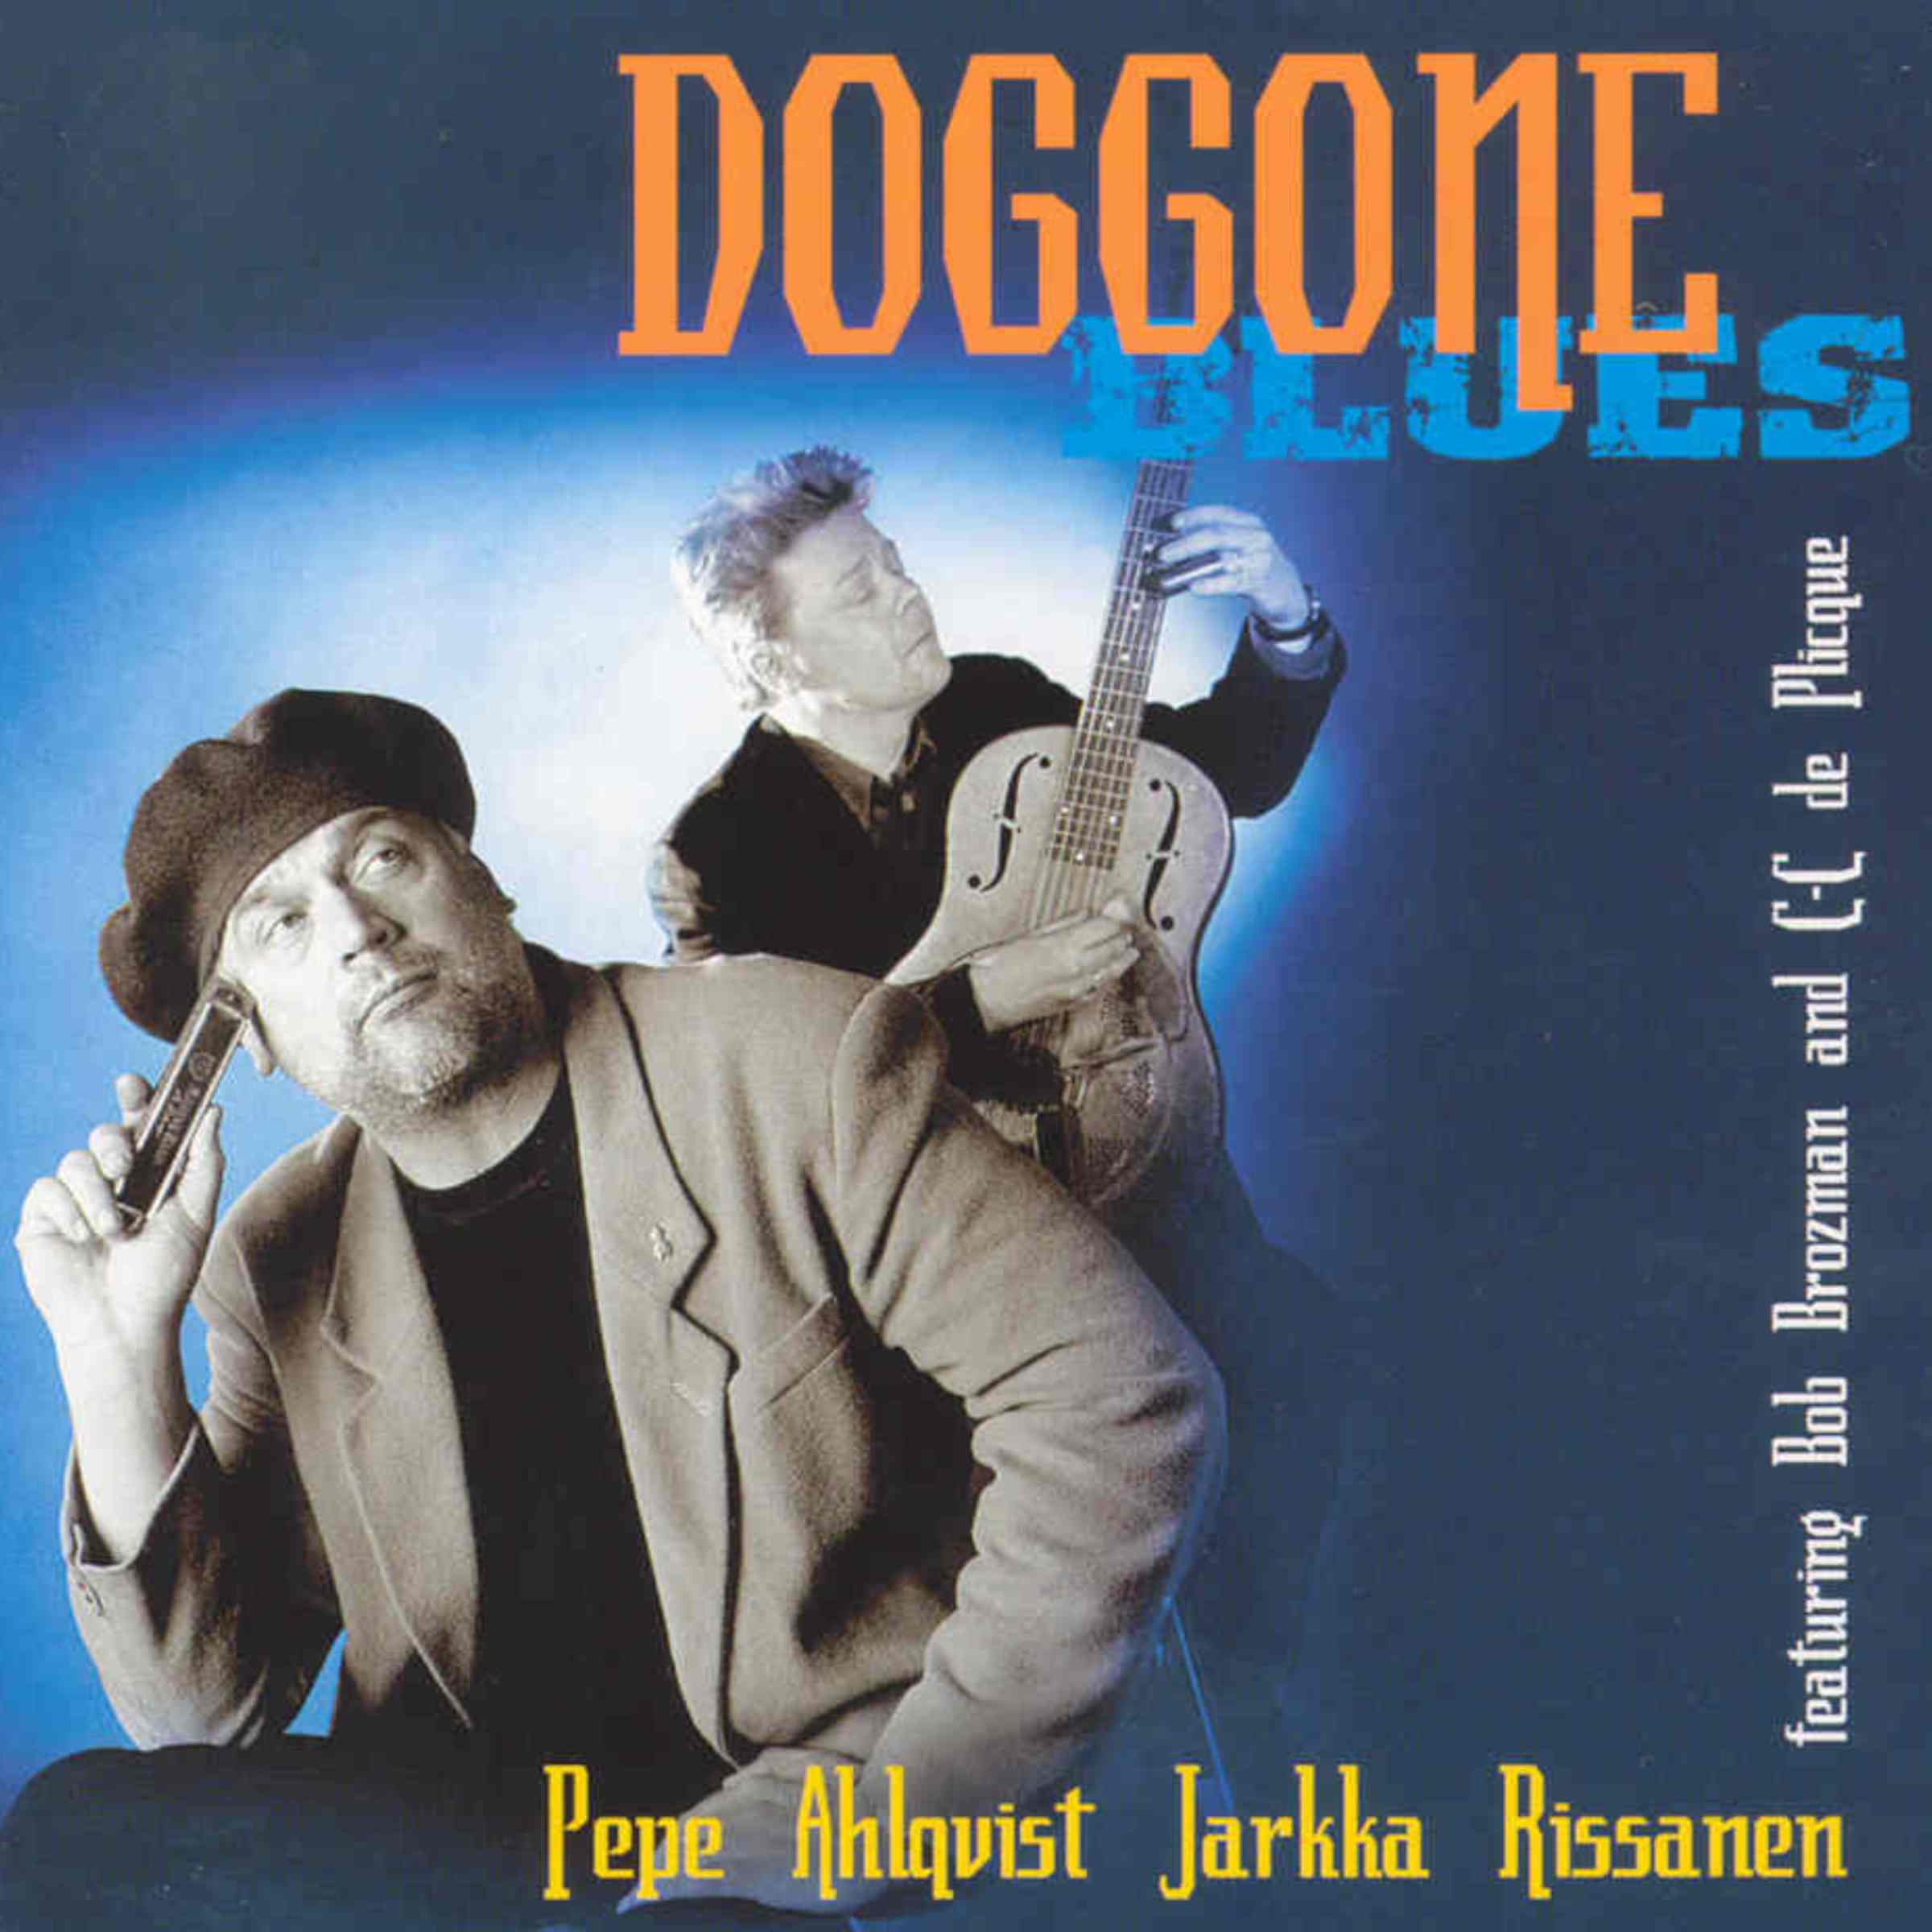 Pepe Ahlqvist & Jarkka Rissanen - Doggone Blues - CD